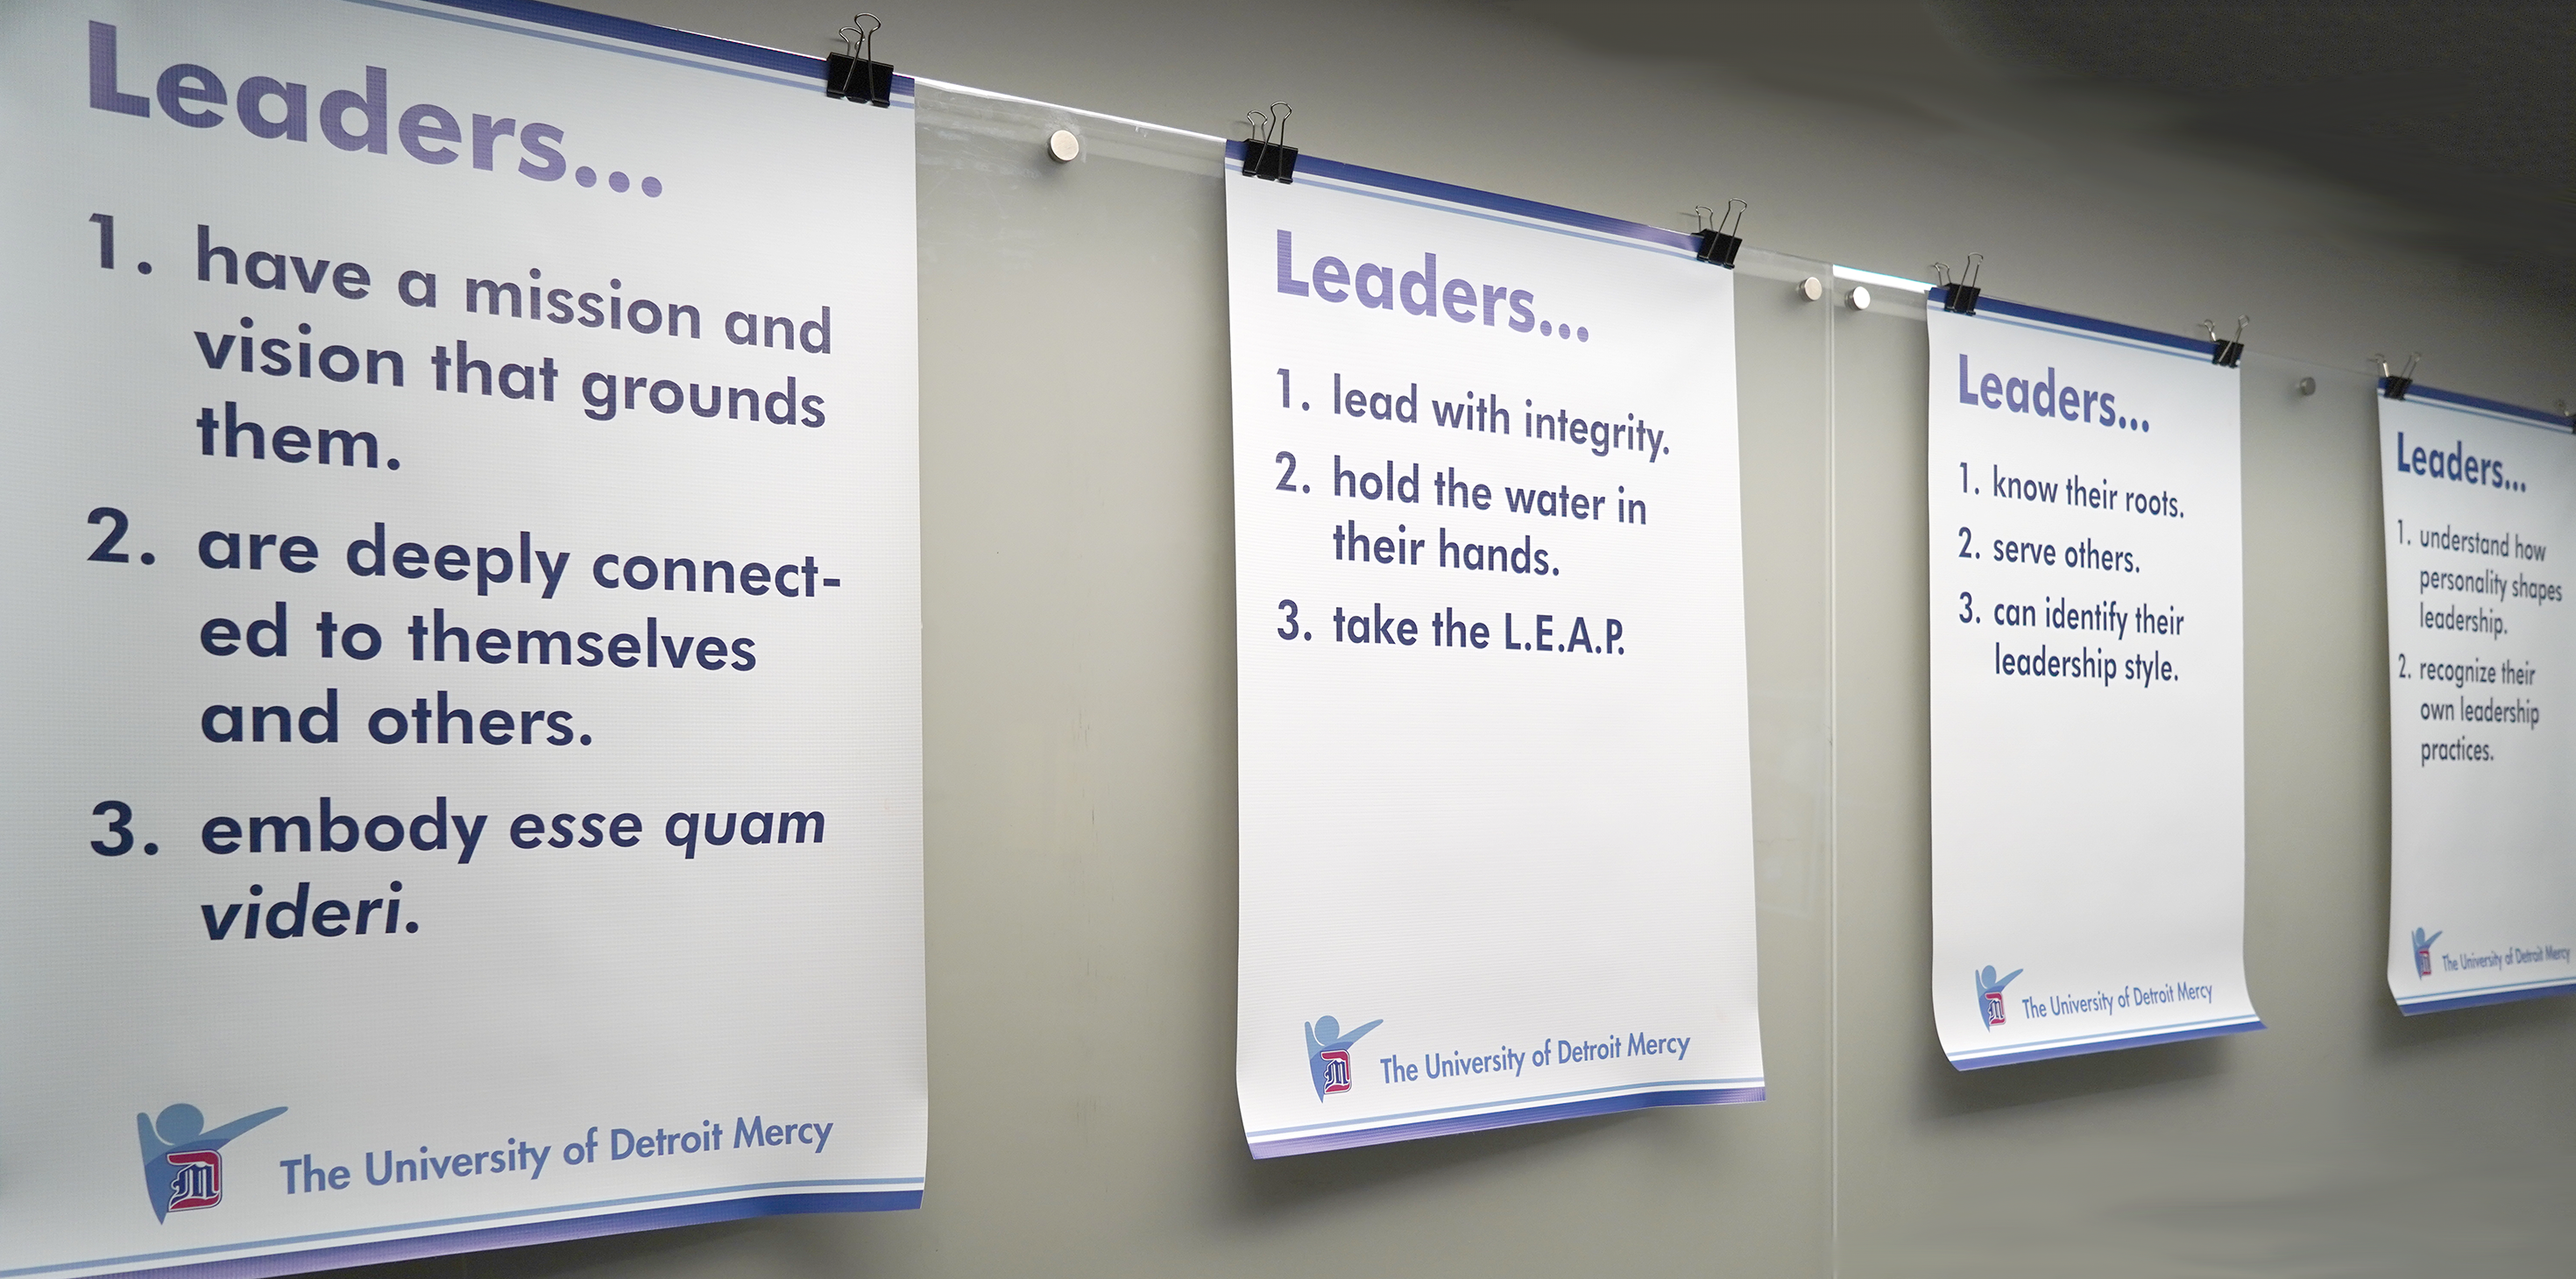 Several leadership posters